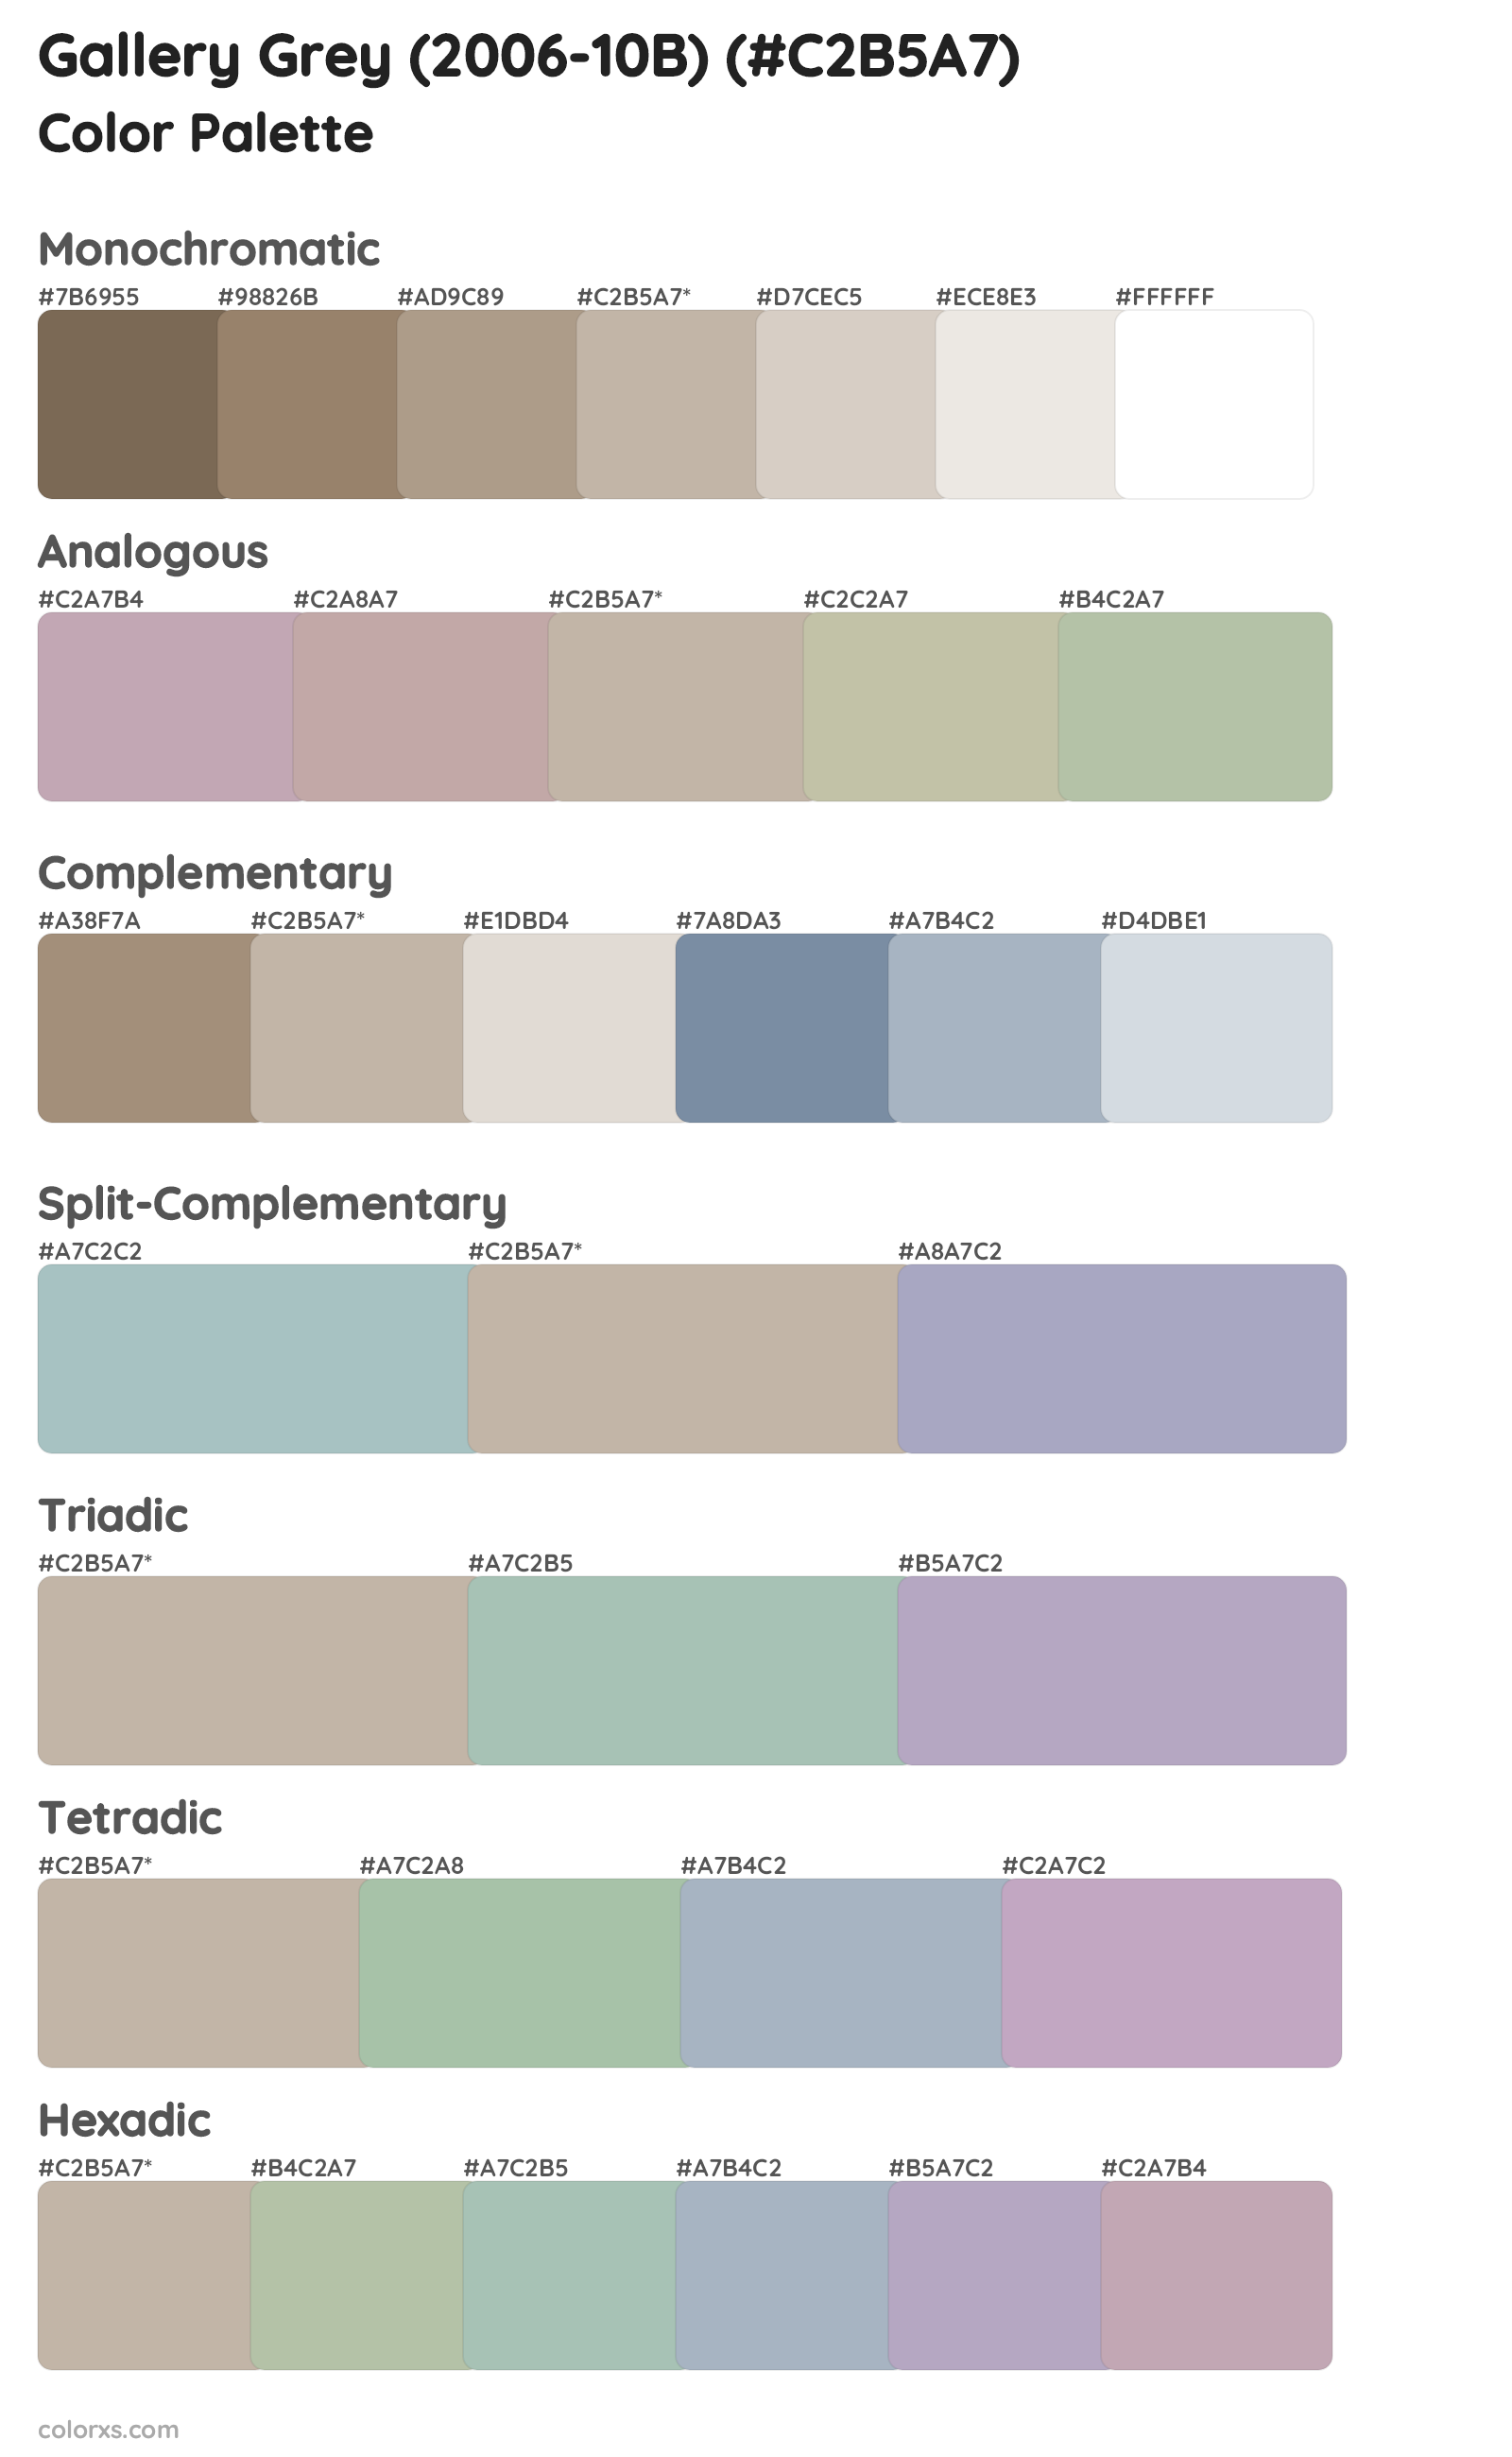 Gallery Grey (2006-10B) Color Scheme Palettes